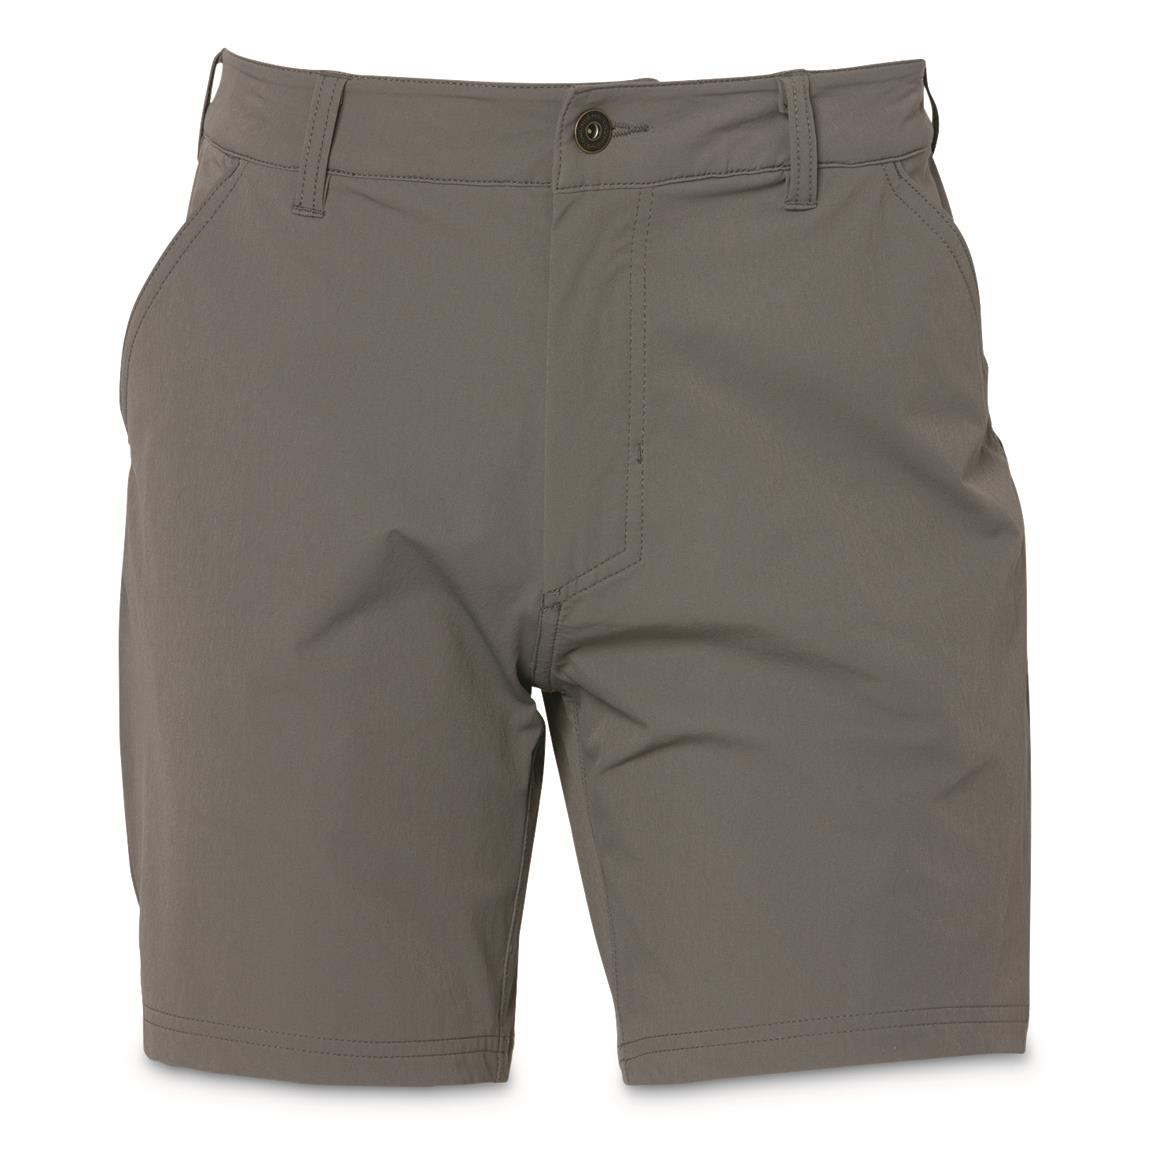 Grundens Gaff 7" Shorts, Charcoal